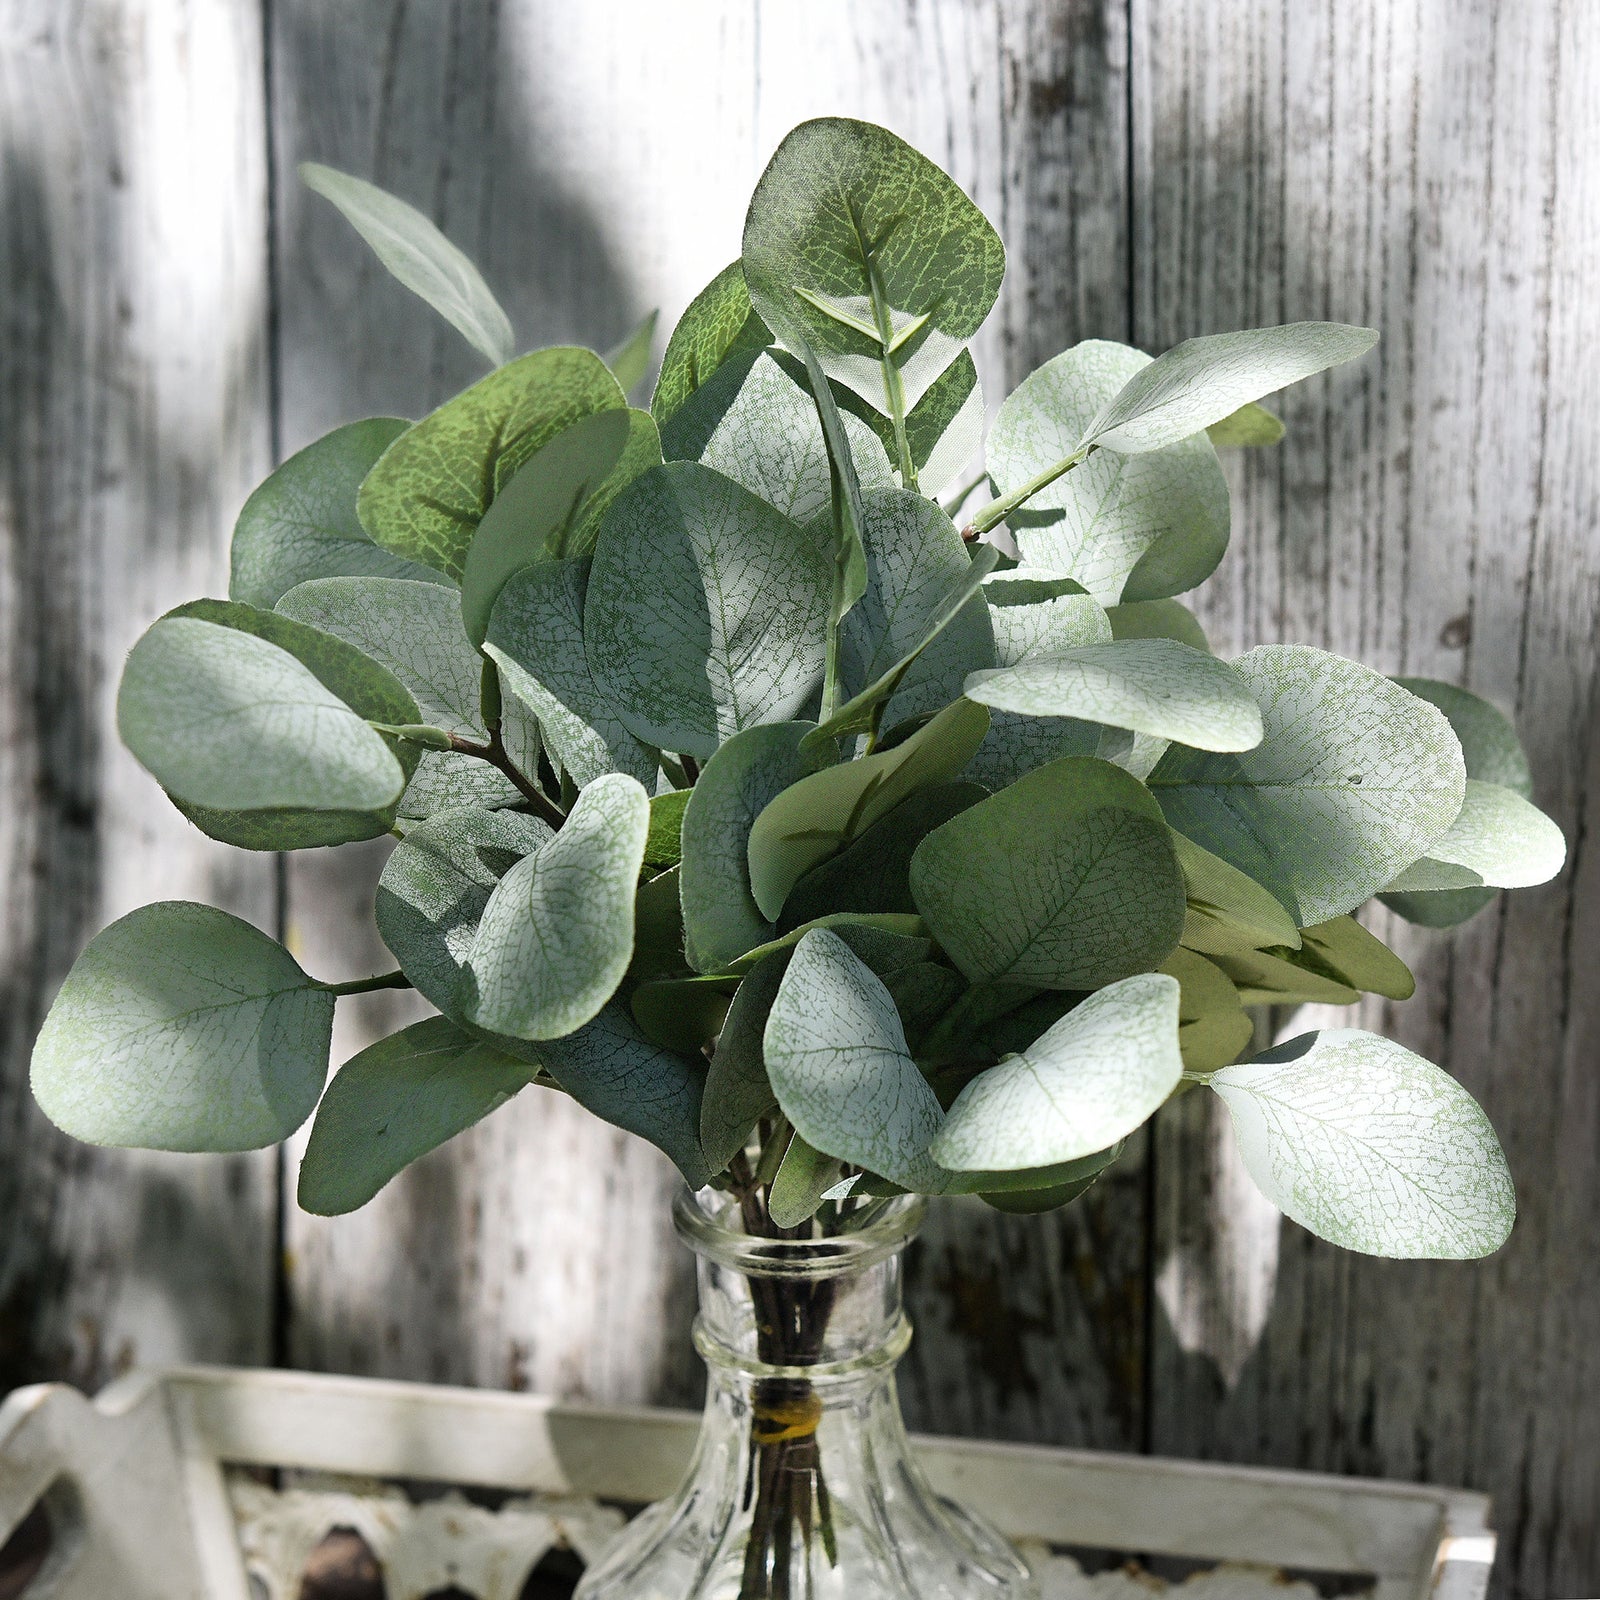 FiveSeasonStuff 10 Stems Realistic Looking Artificial Silver Dollar Eucalyptus Foliage Home Decor